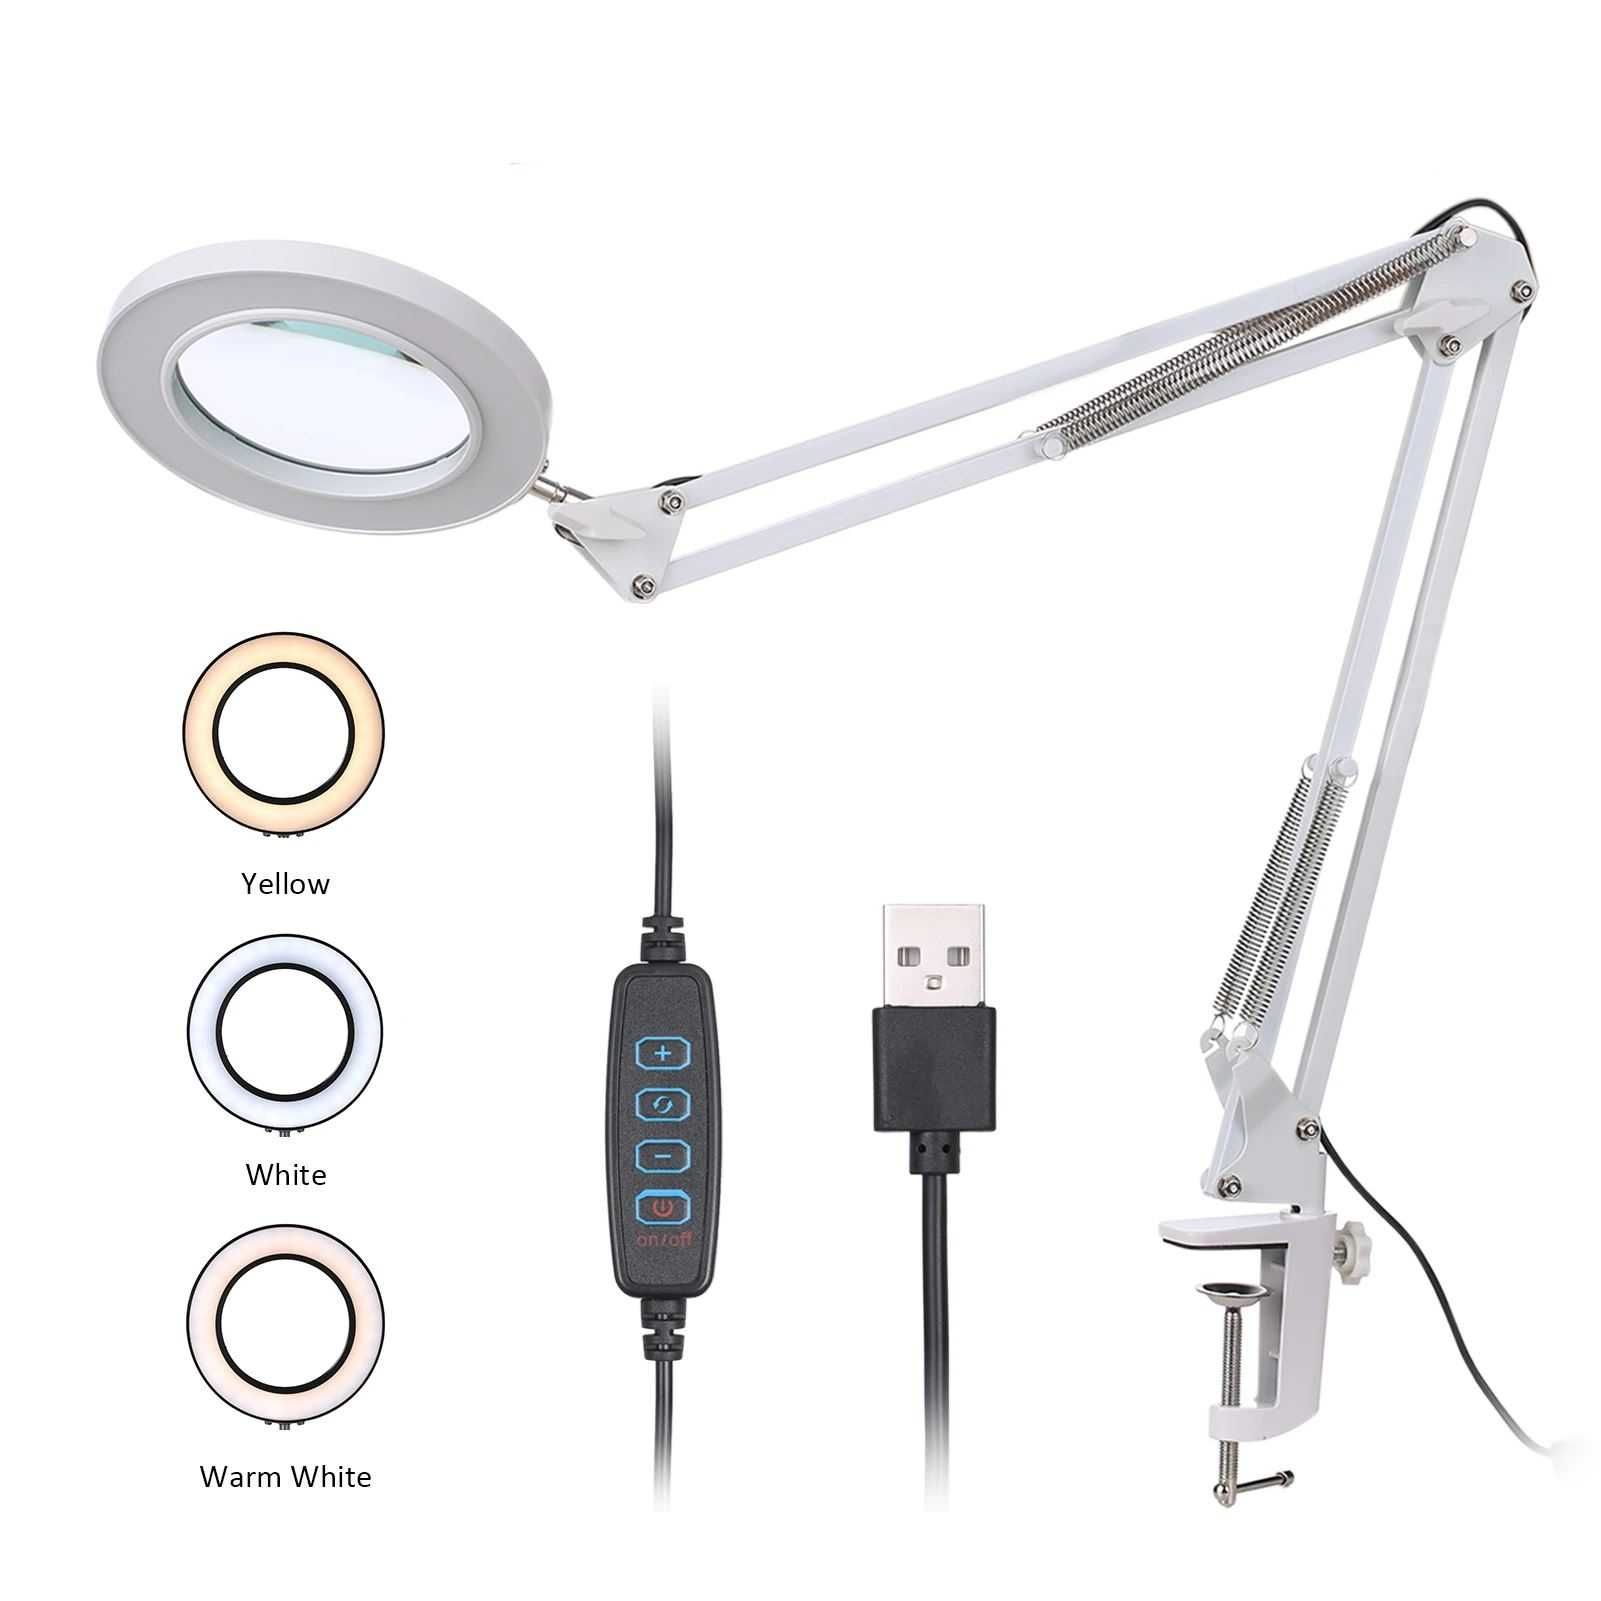 Козметична лампа лупа / Лампа за миглопластика и грим / LED Ринг Лампа